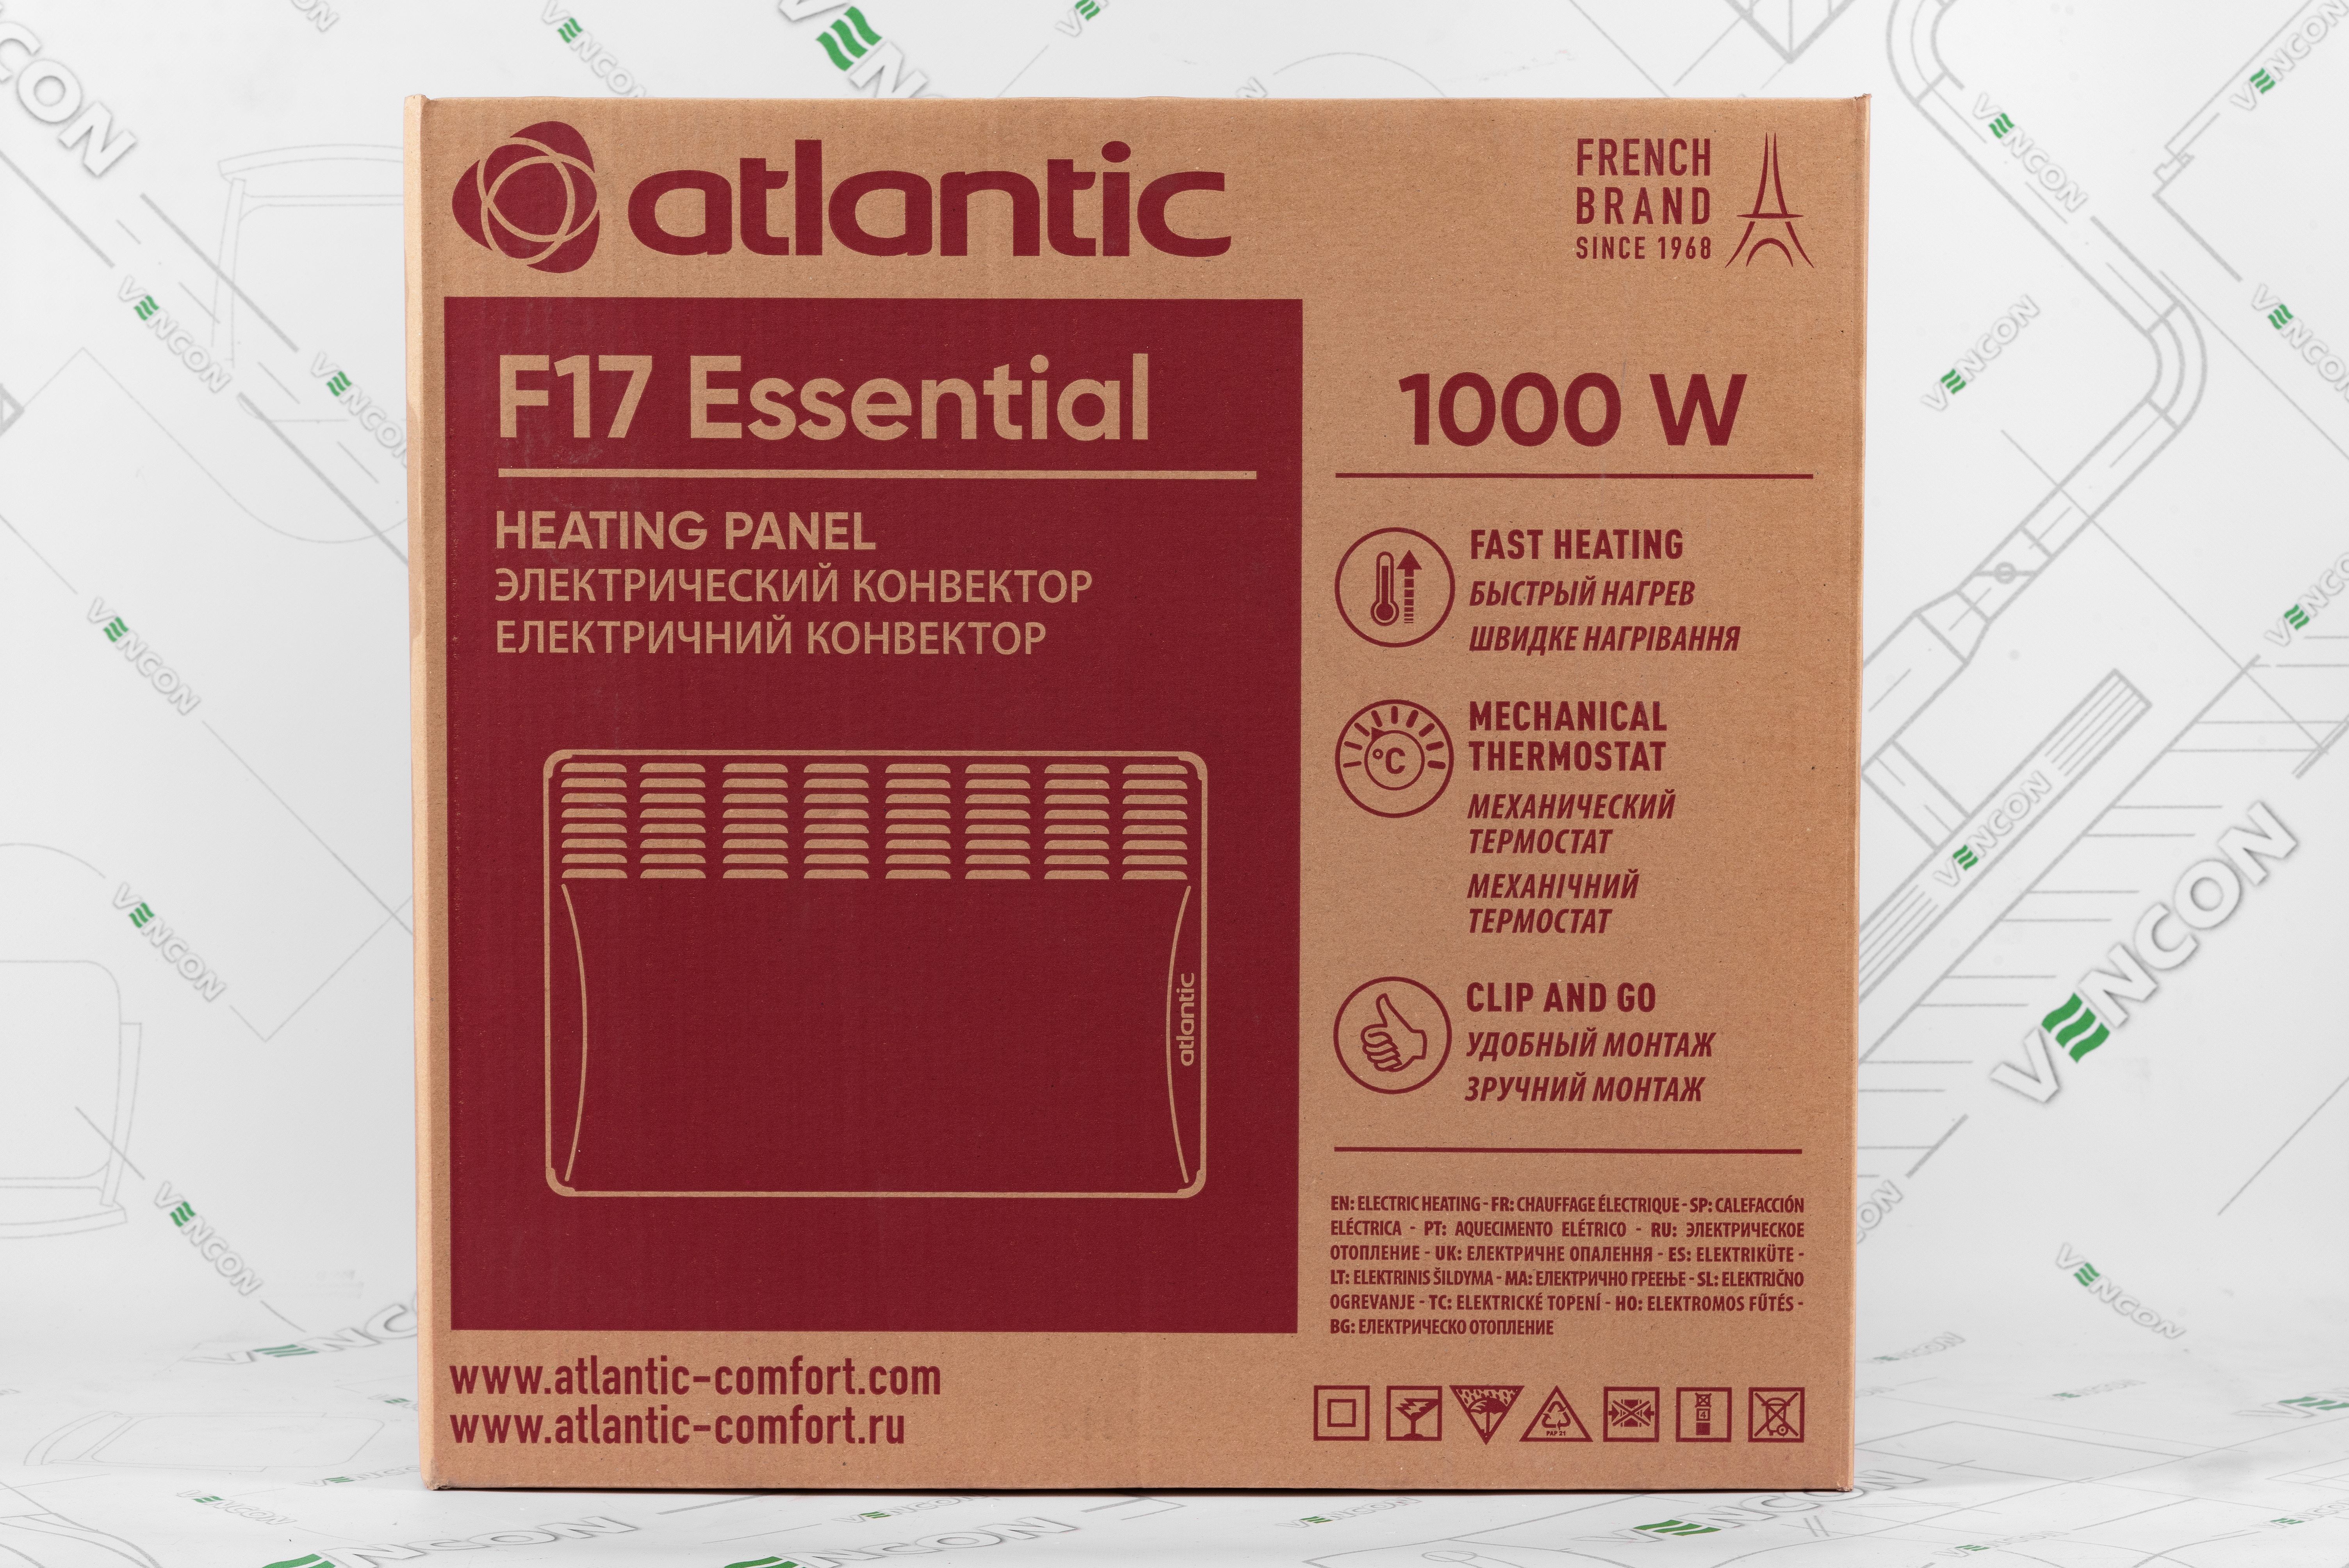 Електричний конвектор Atlantic F17 Essential CMG BL-meca 1000 огляд - фото 11